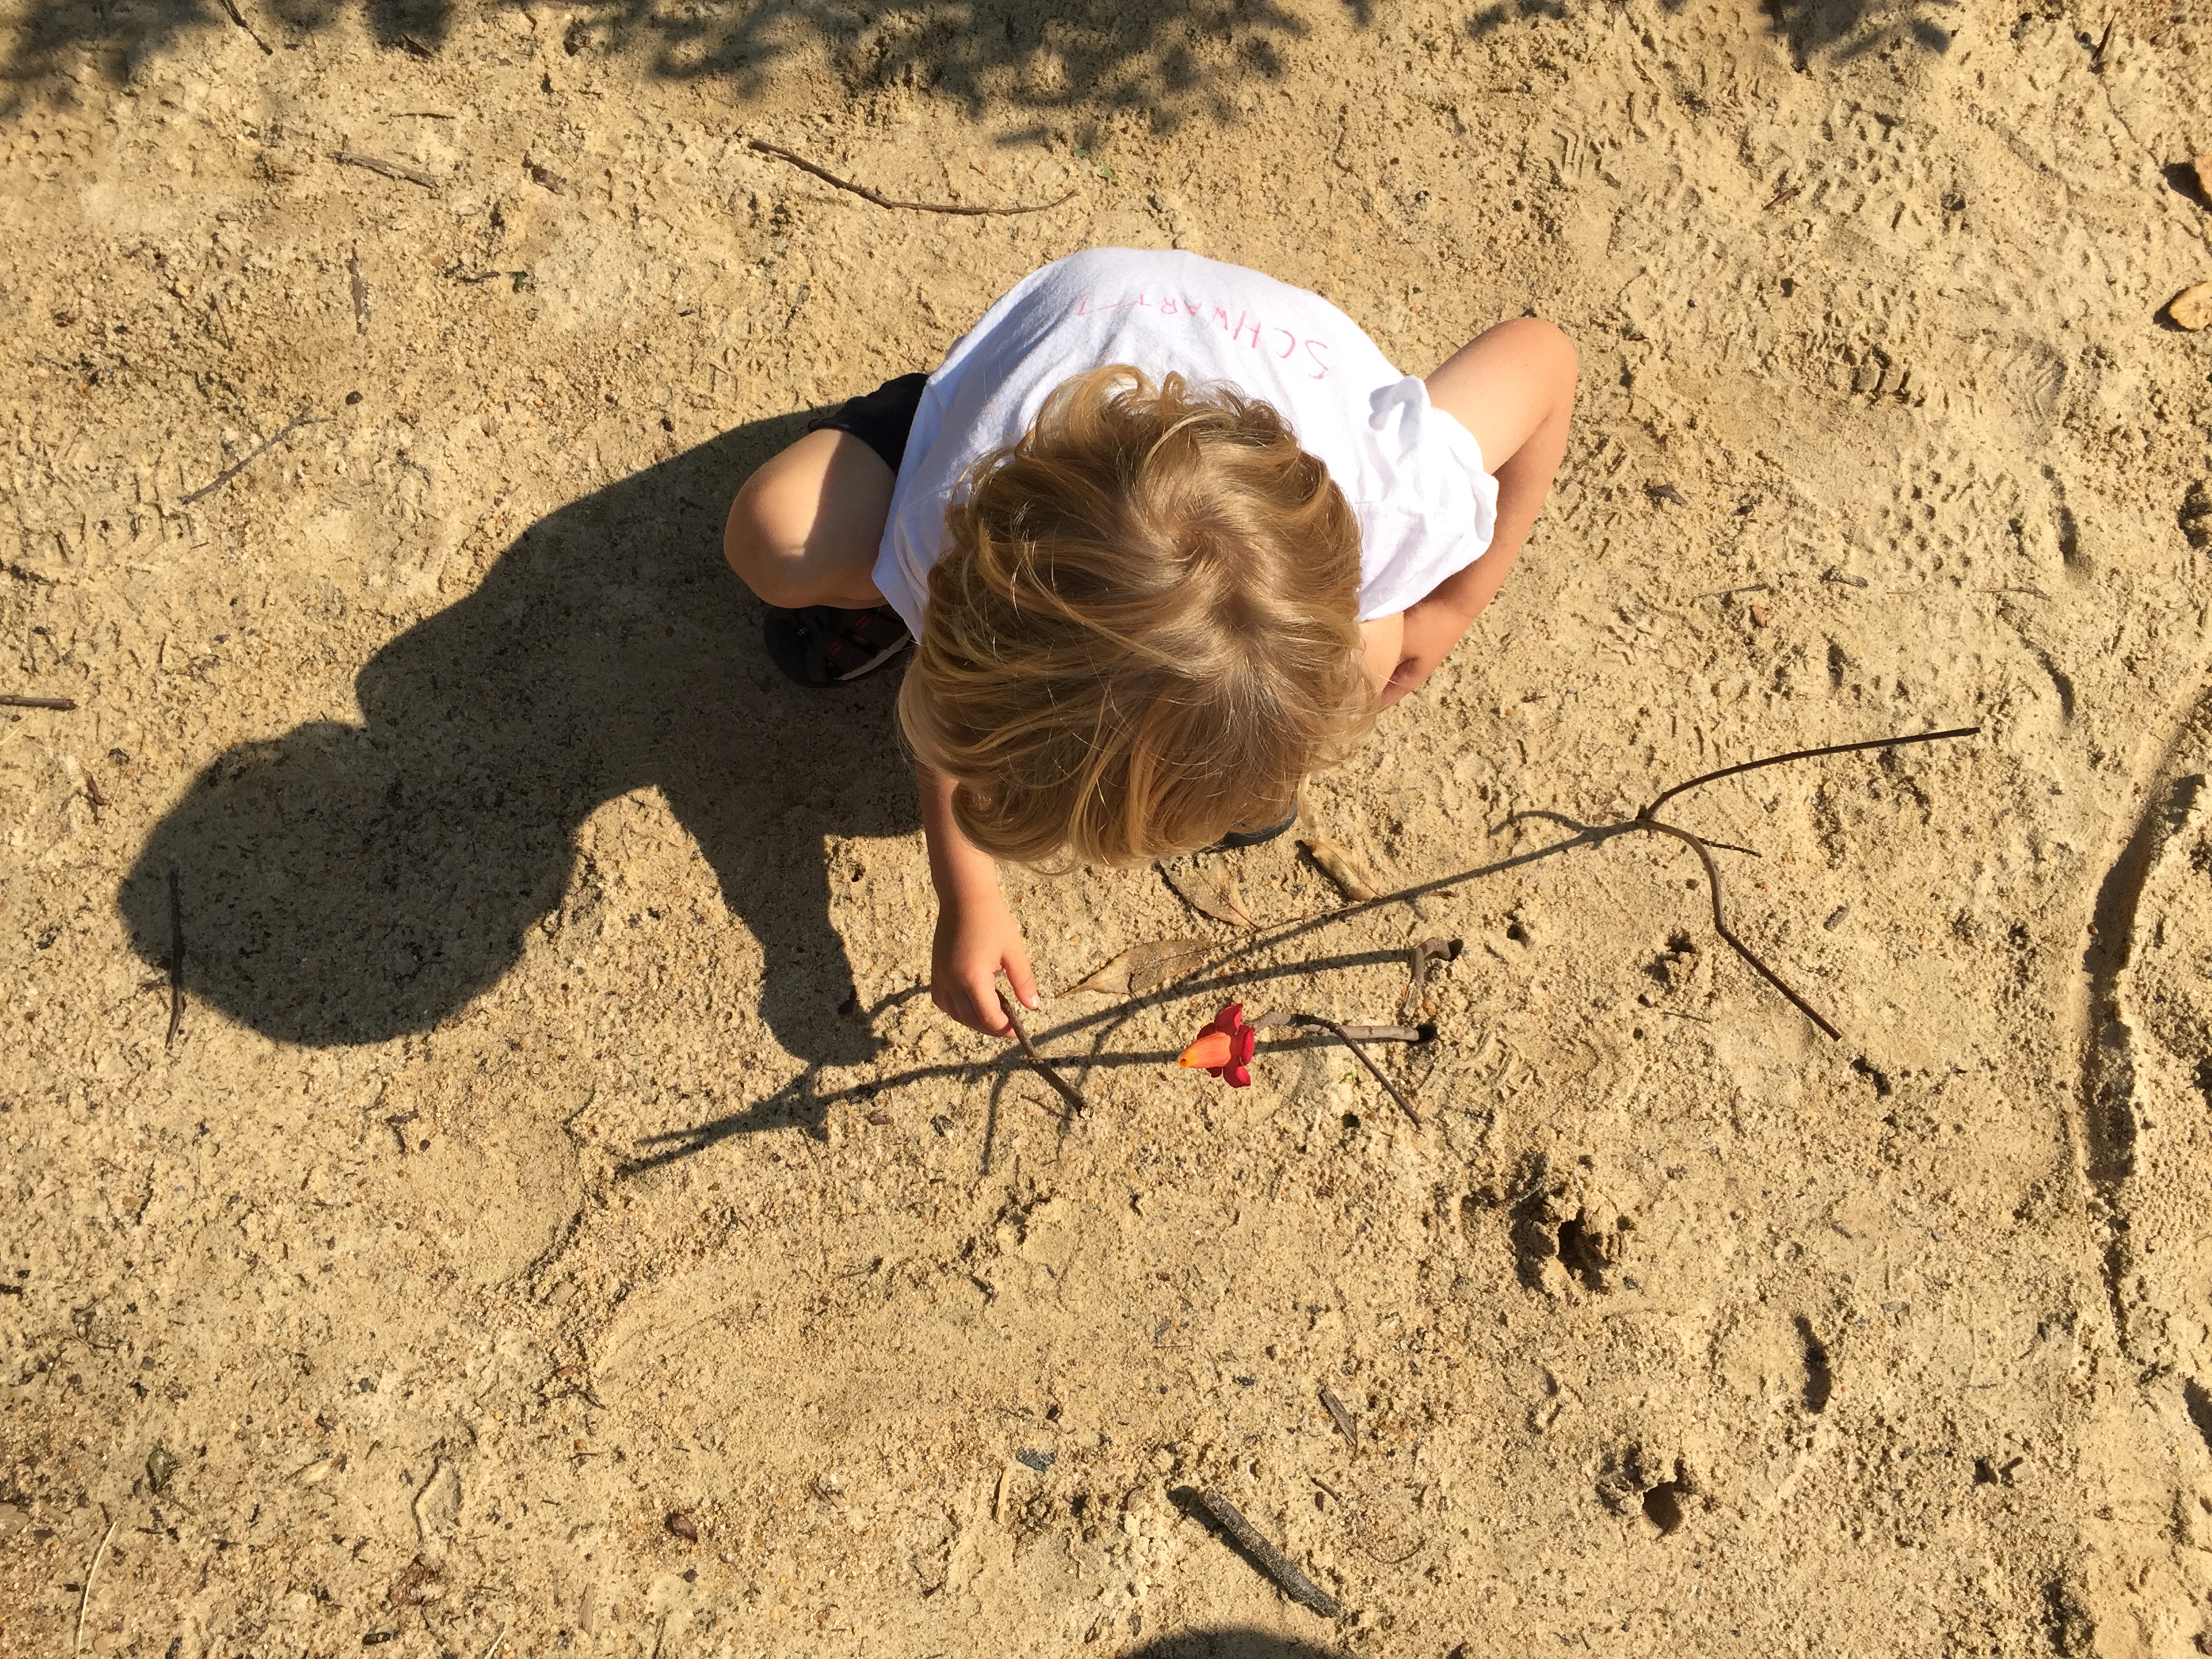 Children making shadow art by arranging sticks stuck into sand to create shadow patterns.